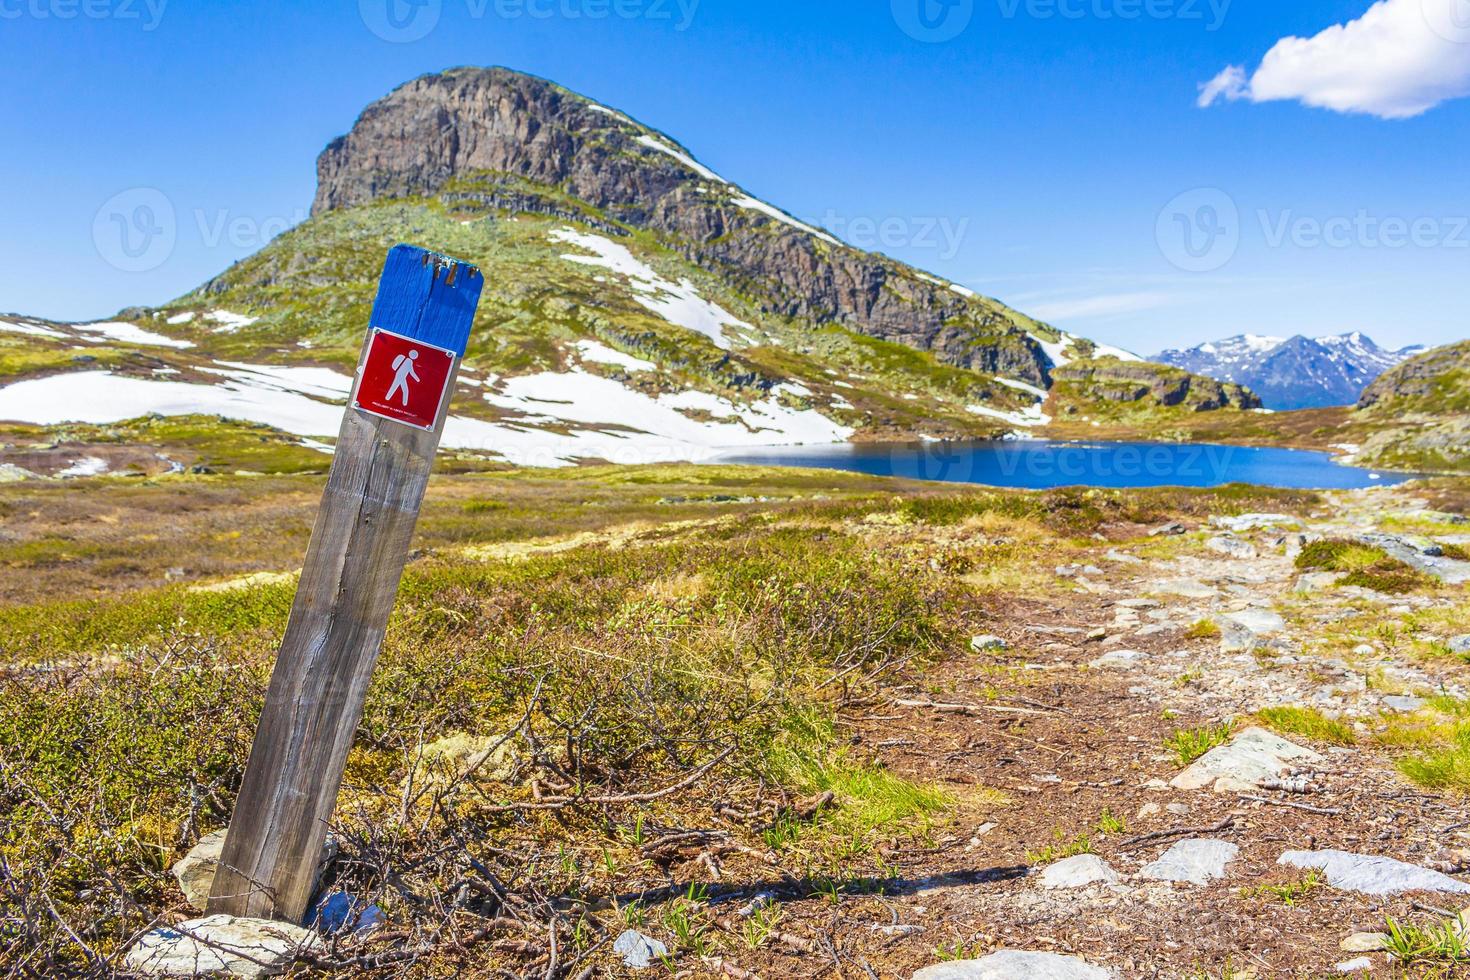 ruta de senderismo a veslehodn veslehorn montaña hydnefossen cascada hemsedal noruega. foto